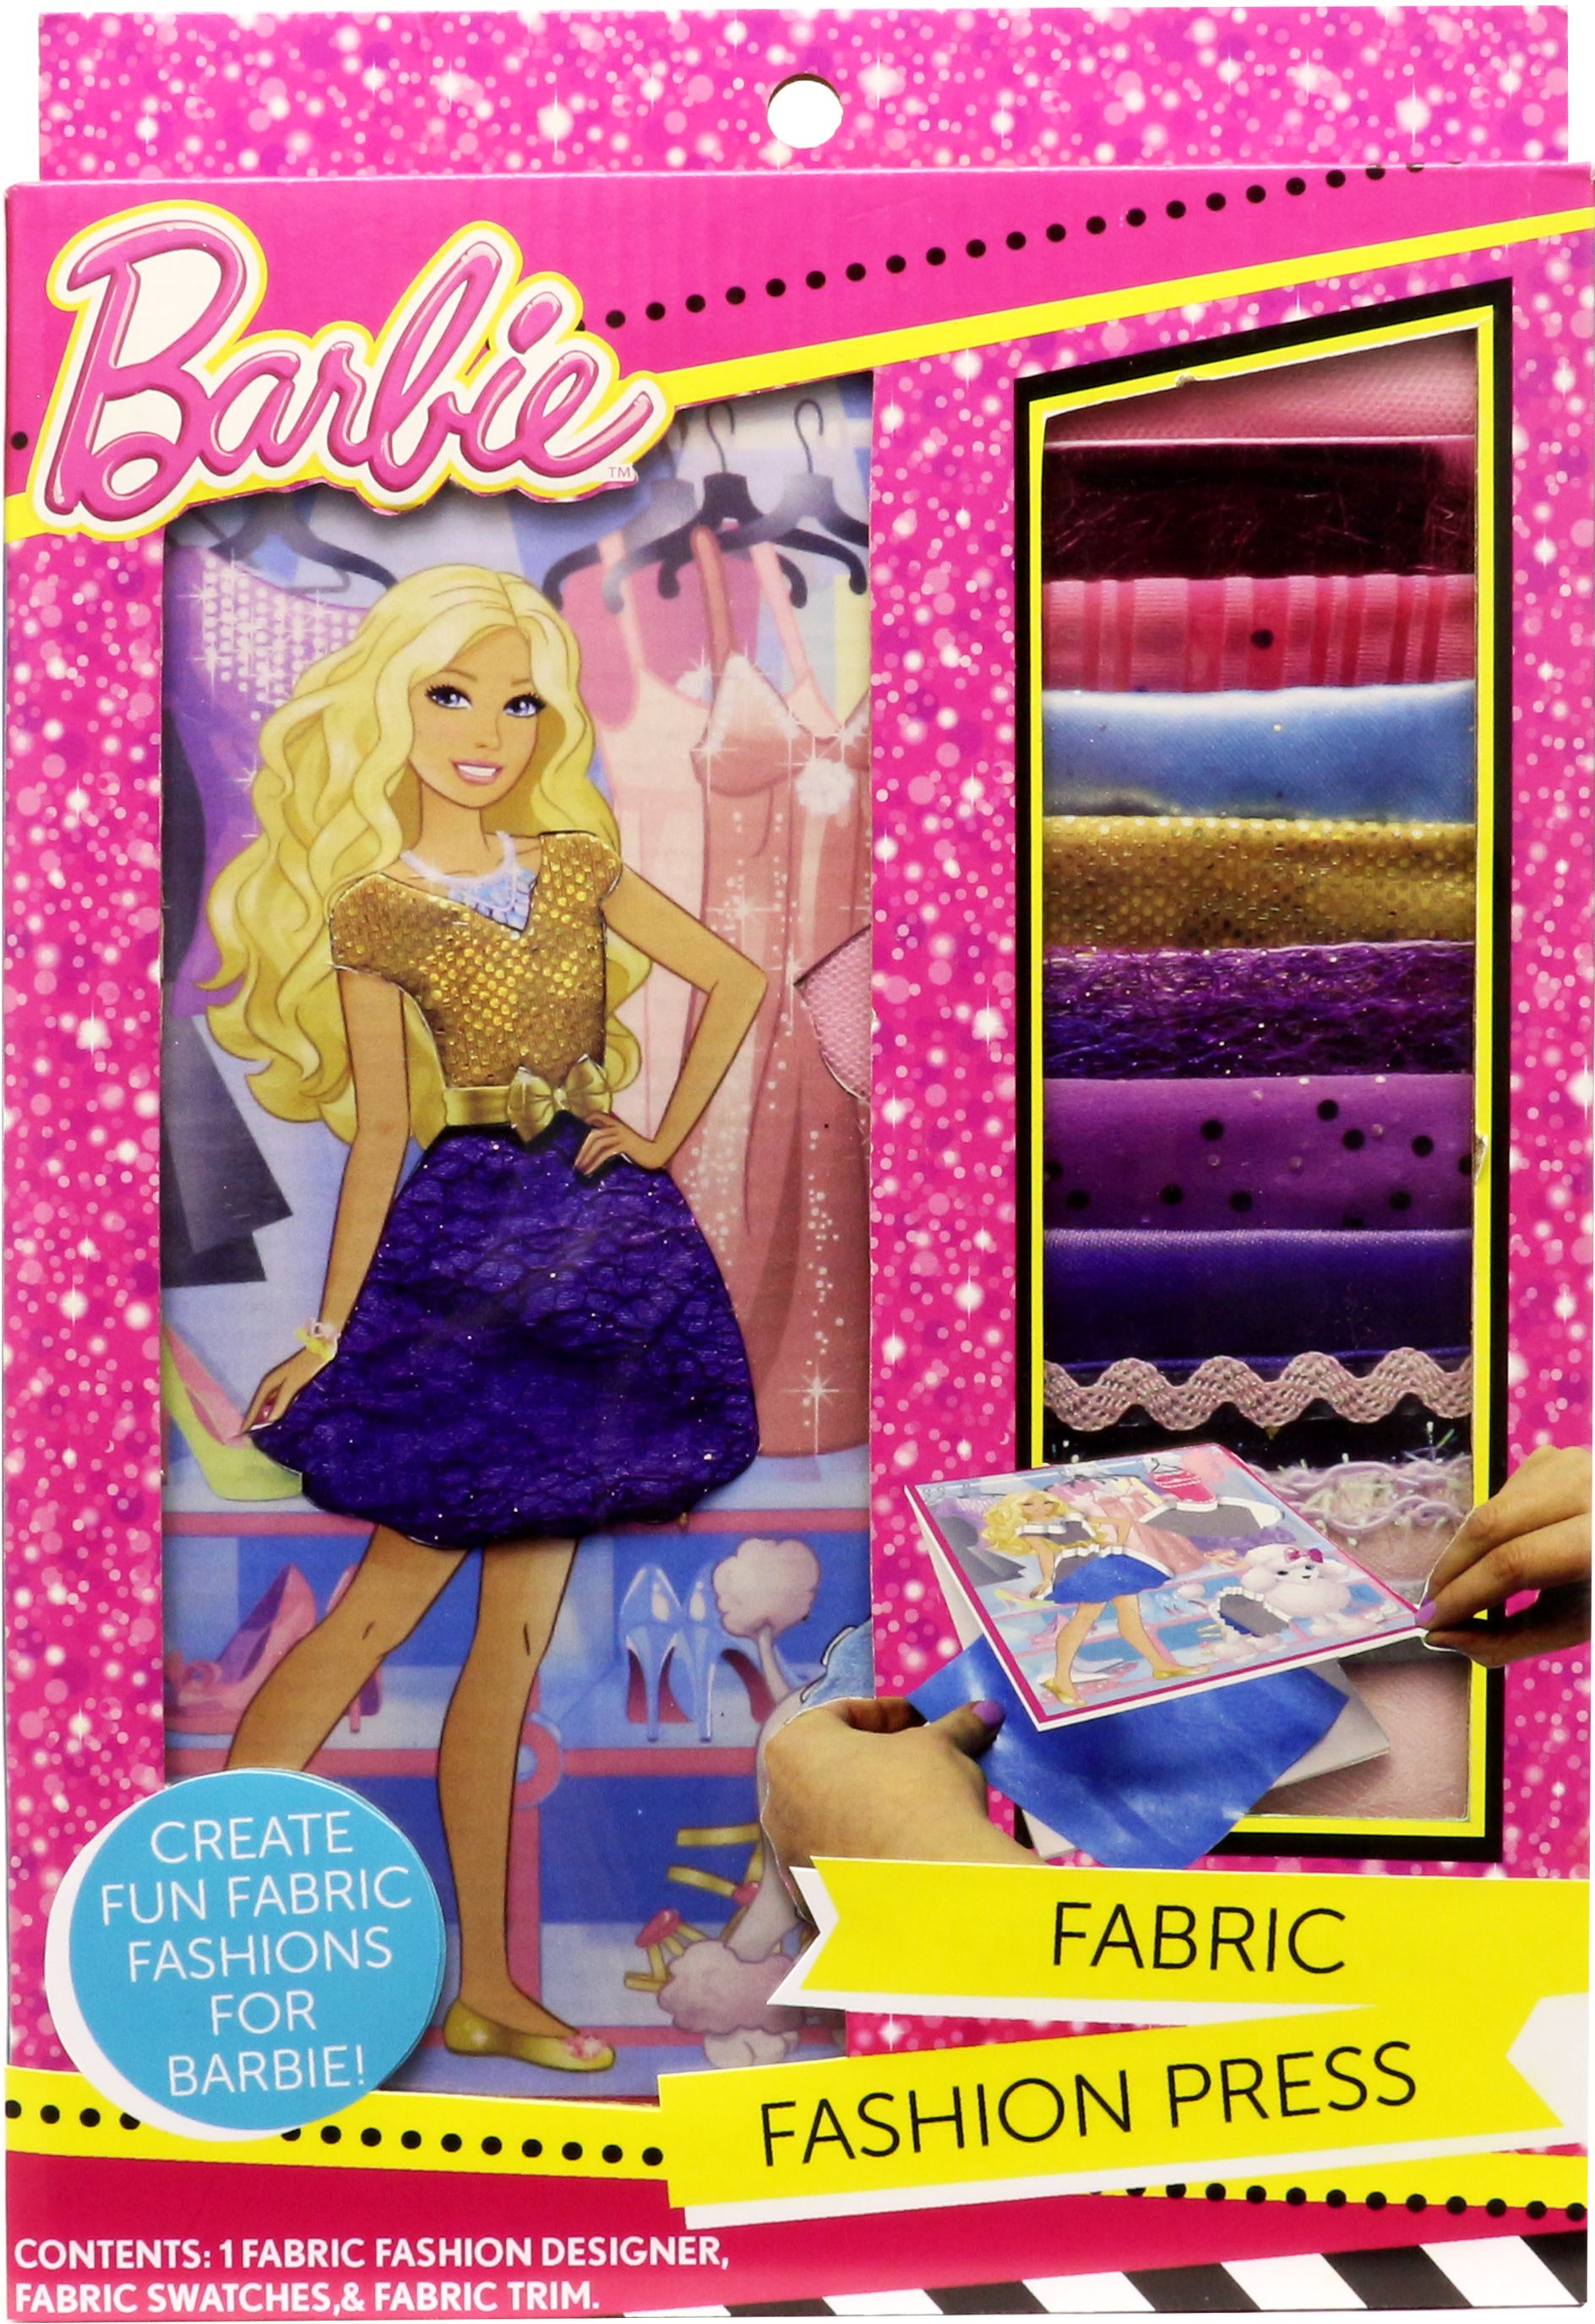 Mattel Barbie Fabric Fashion Press